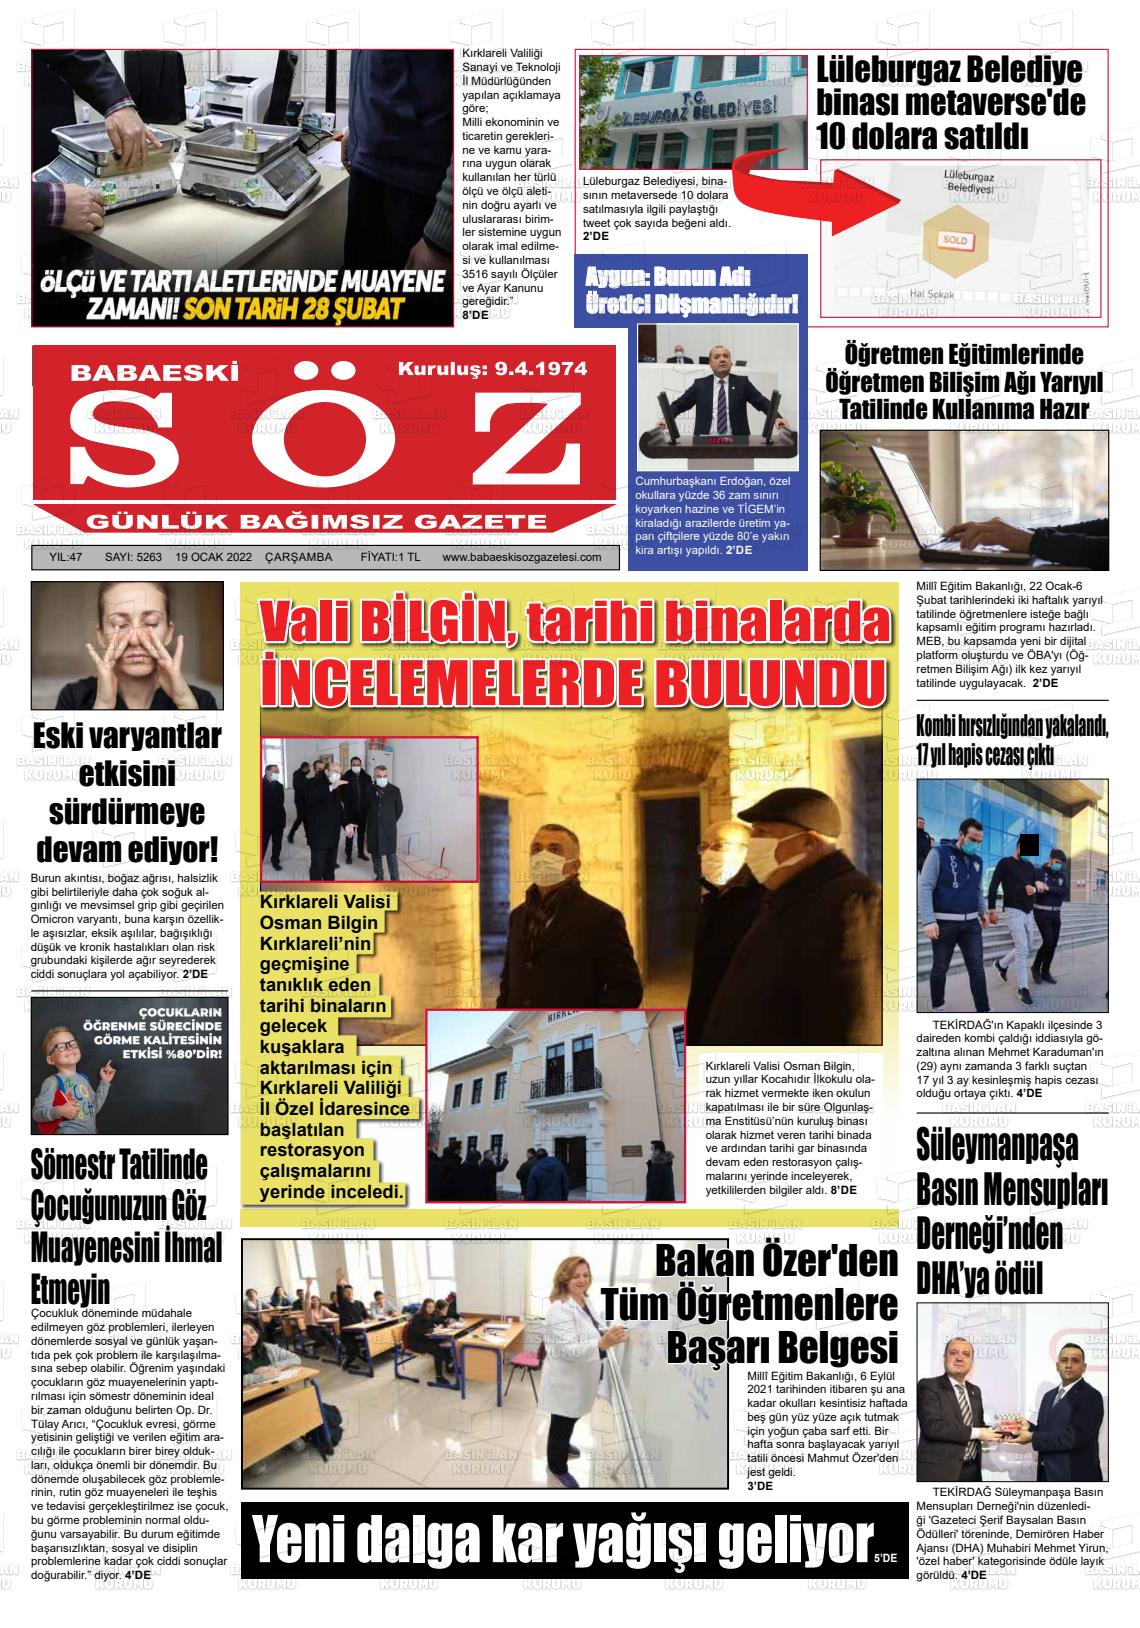 19 Ocak 2022 Babaeski Söz Gazete Manşeti